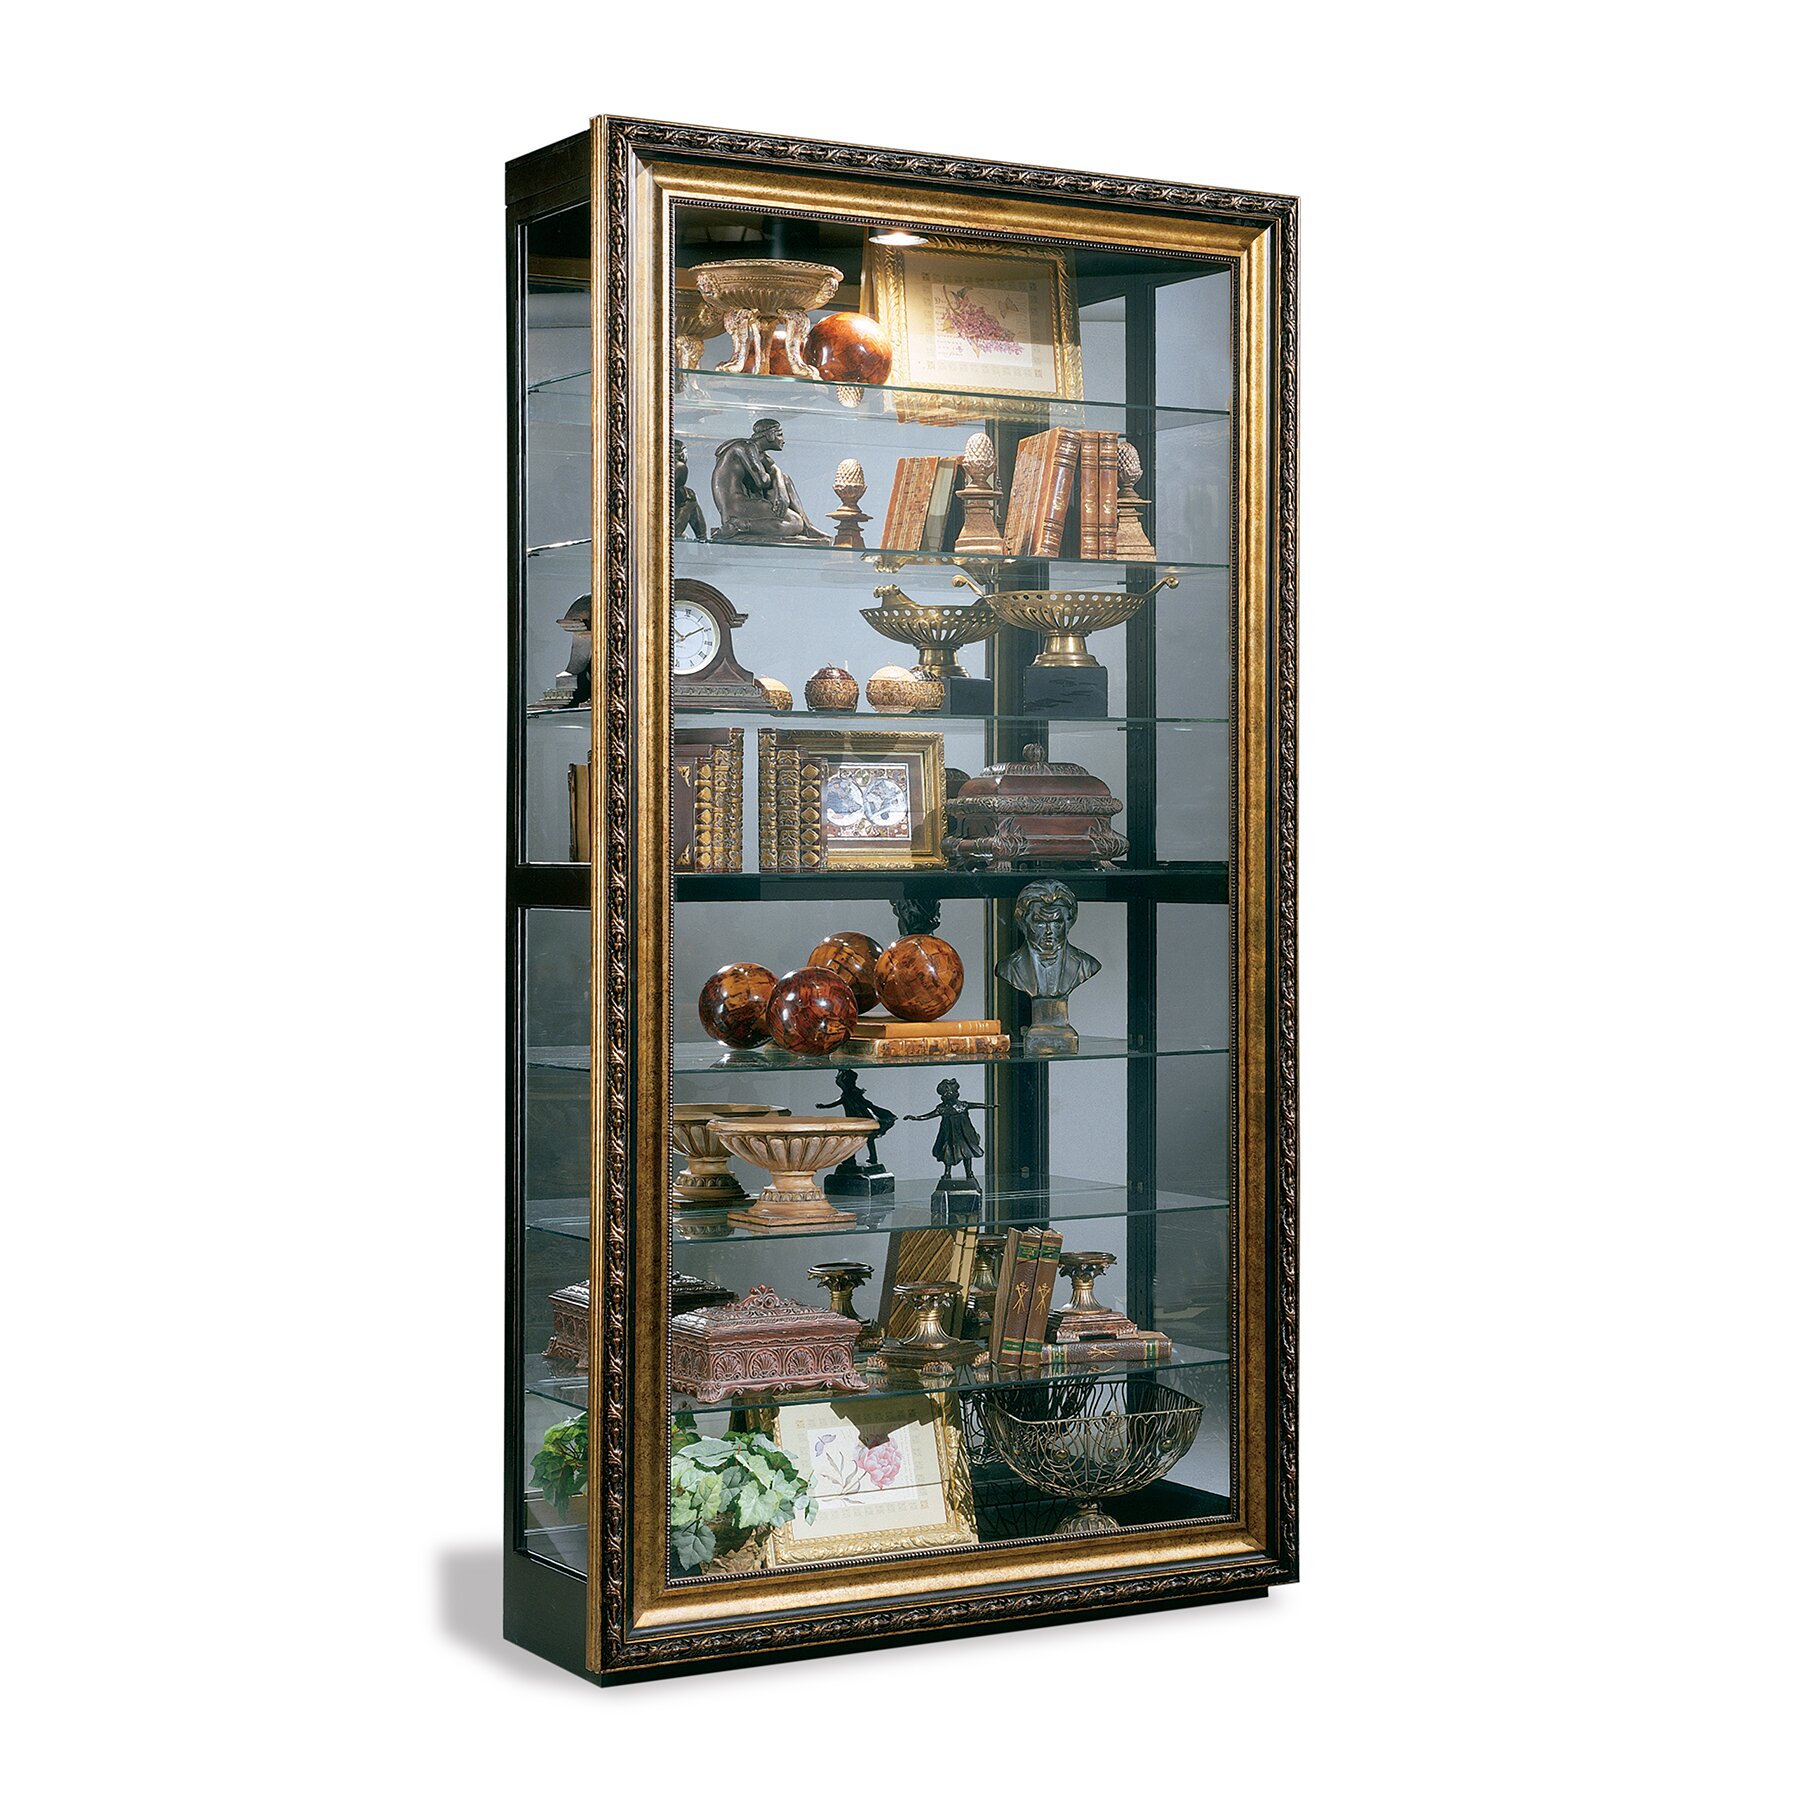 philip reinisch curio cabinet